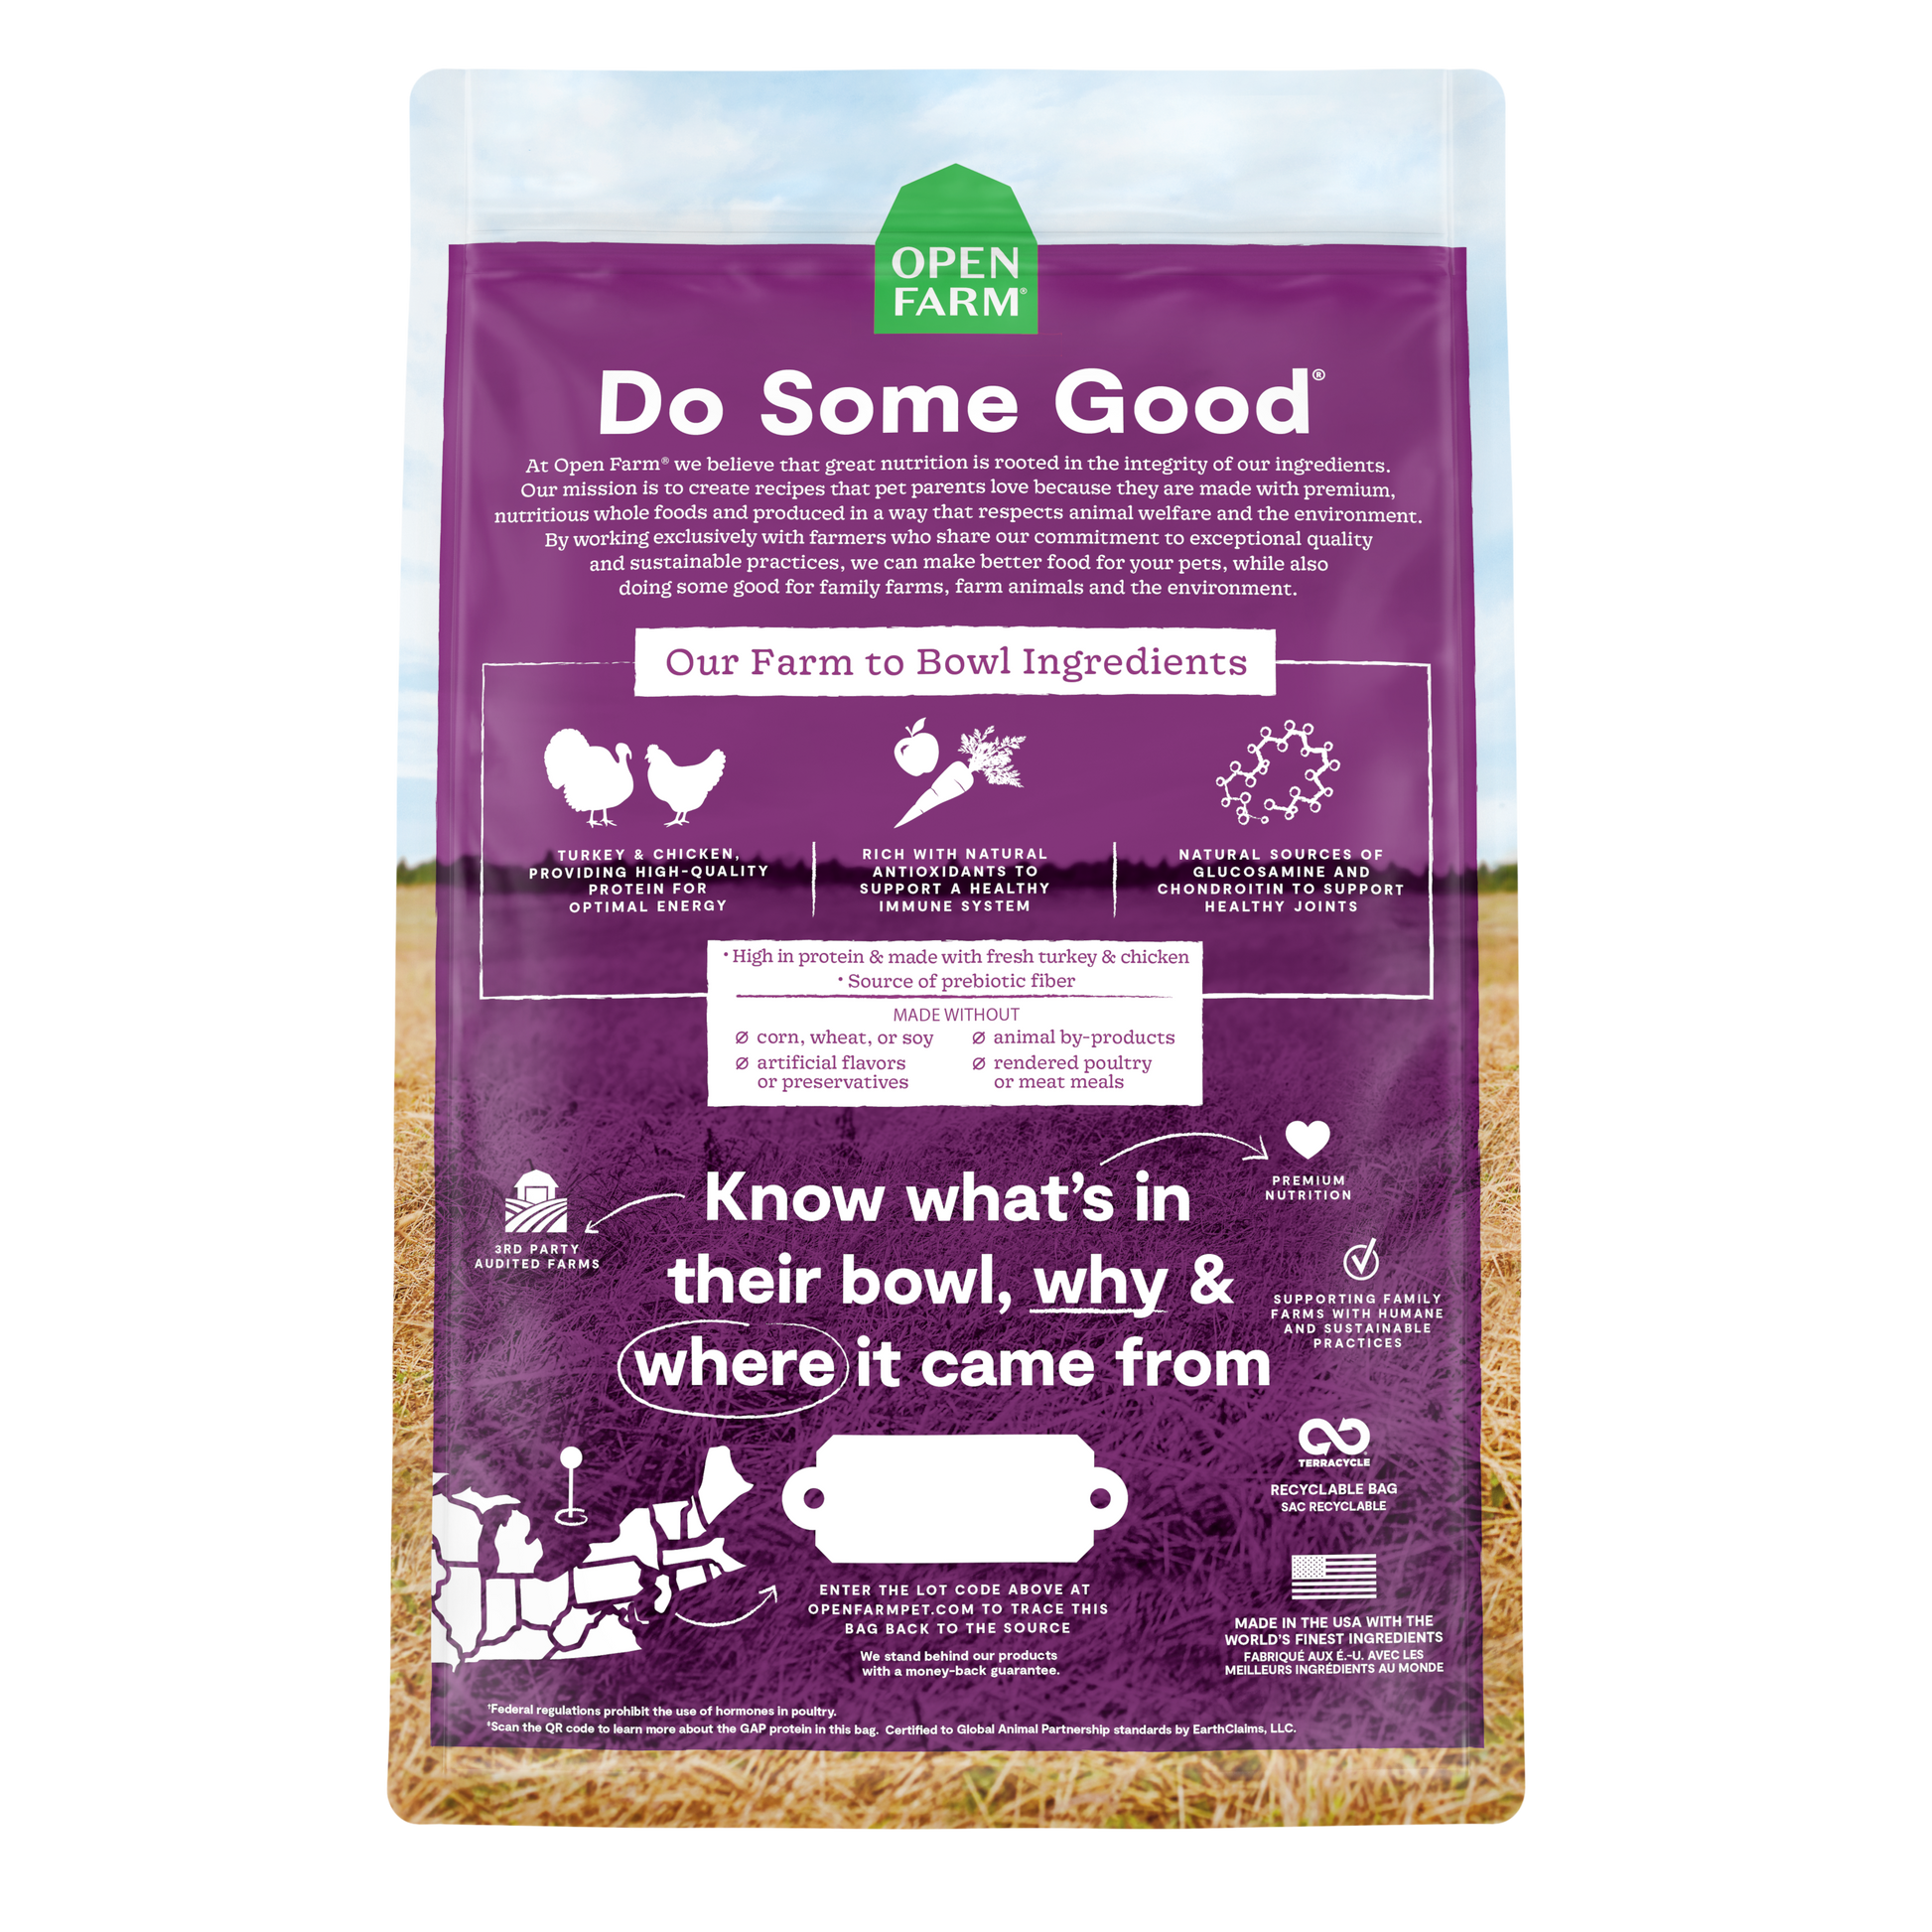 Open Farm Senior Dog Food Recipe  Dog Food  | PetMax Canada